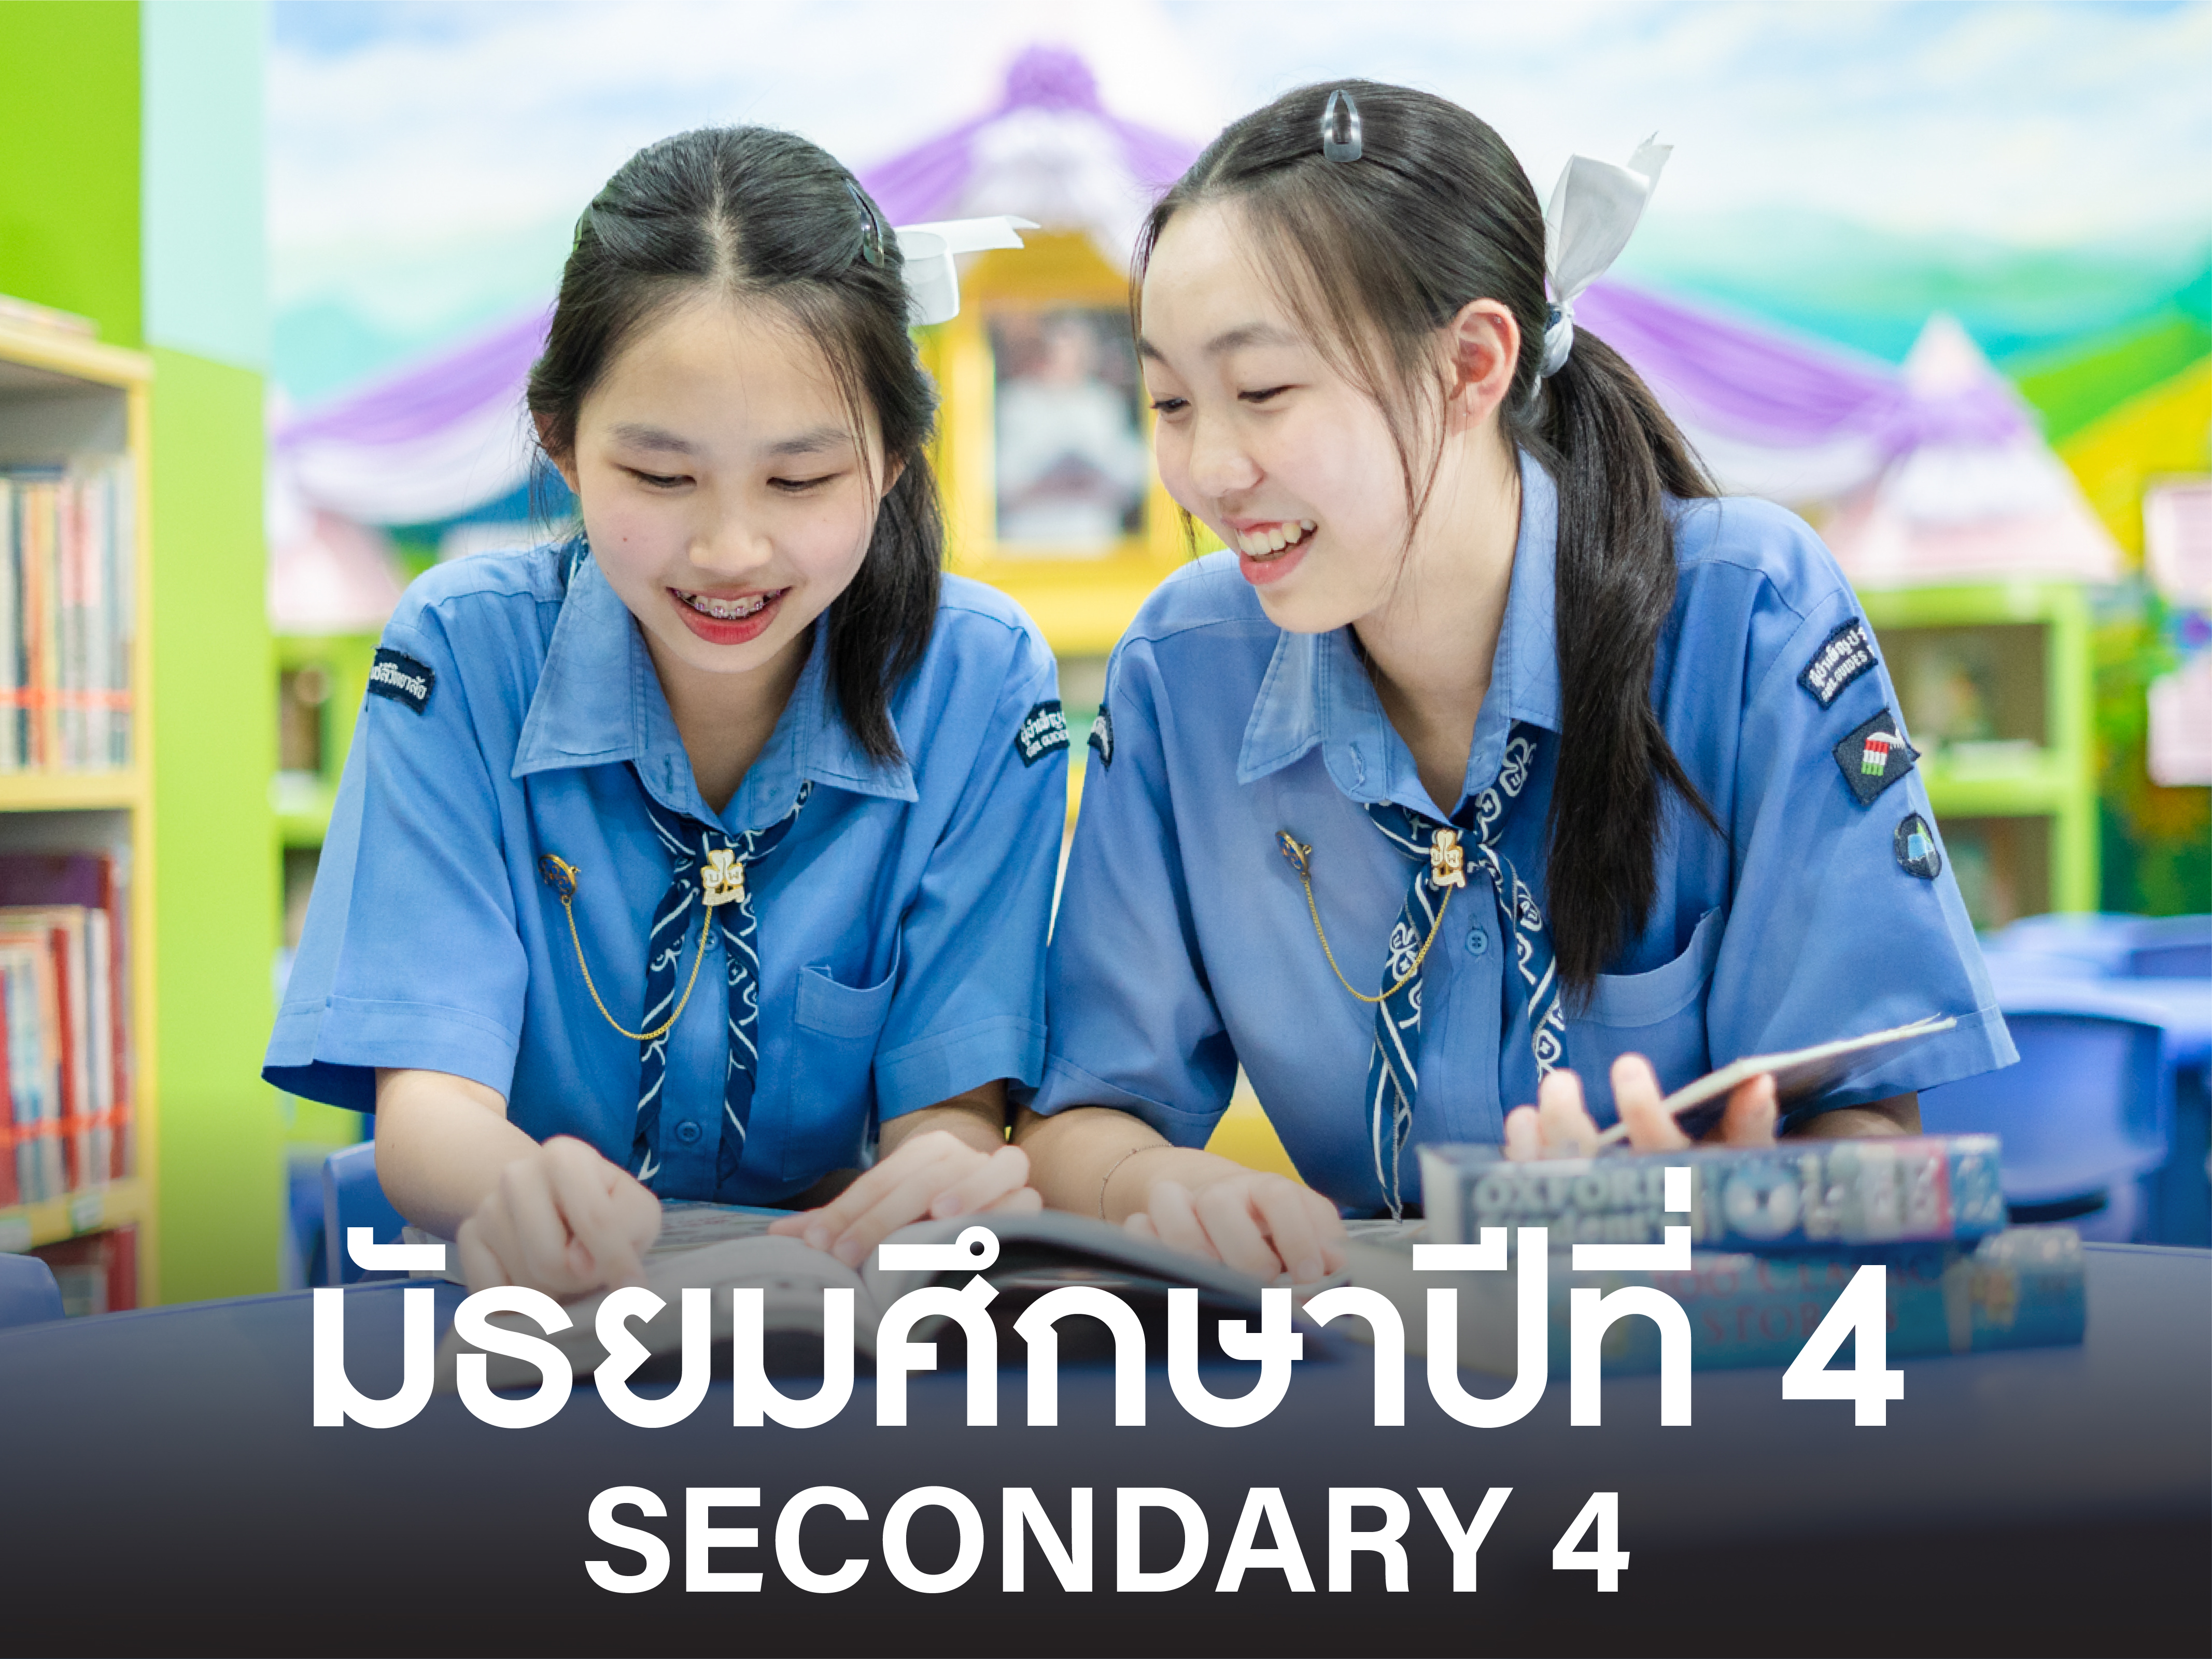 Secondary 4